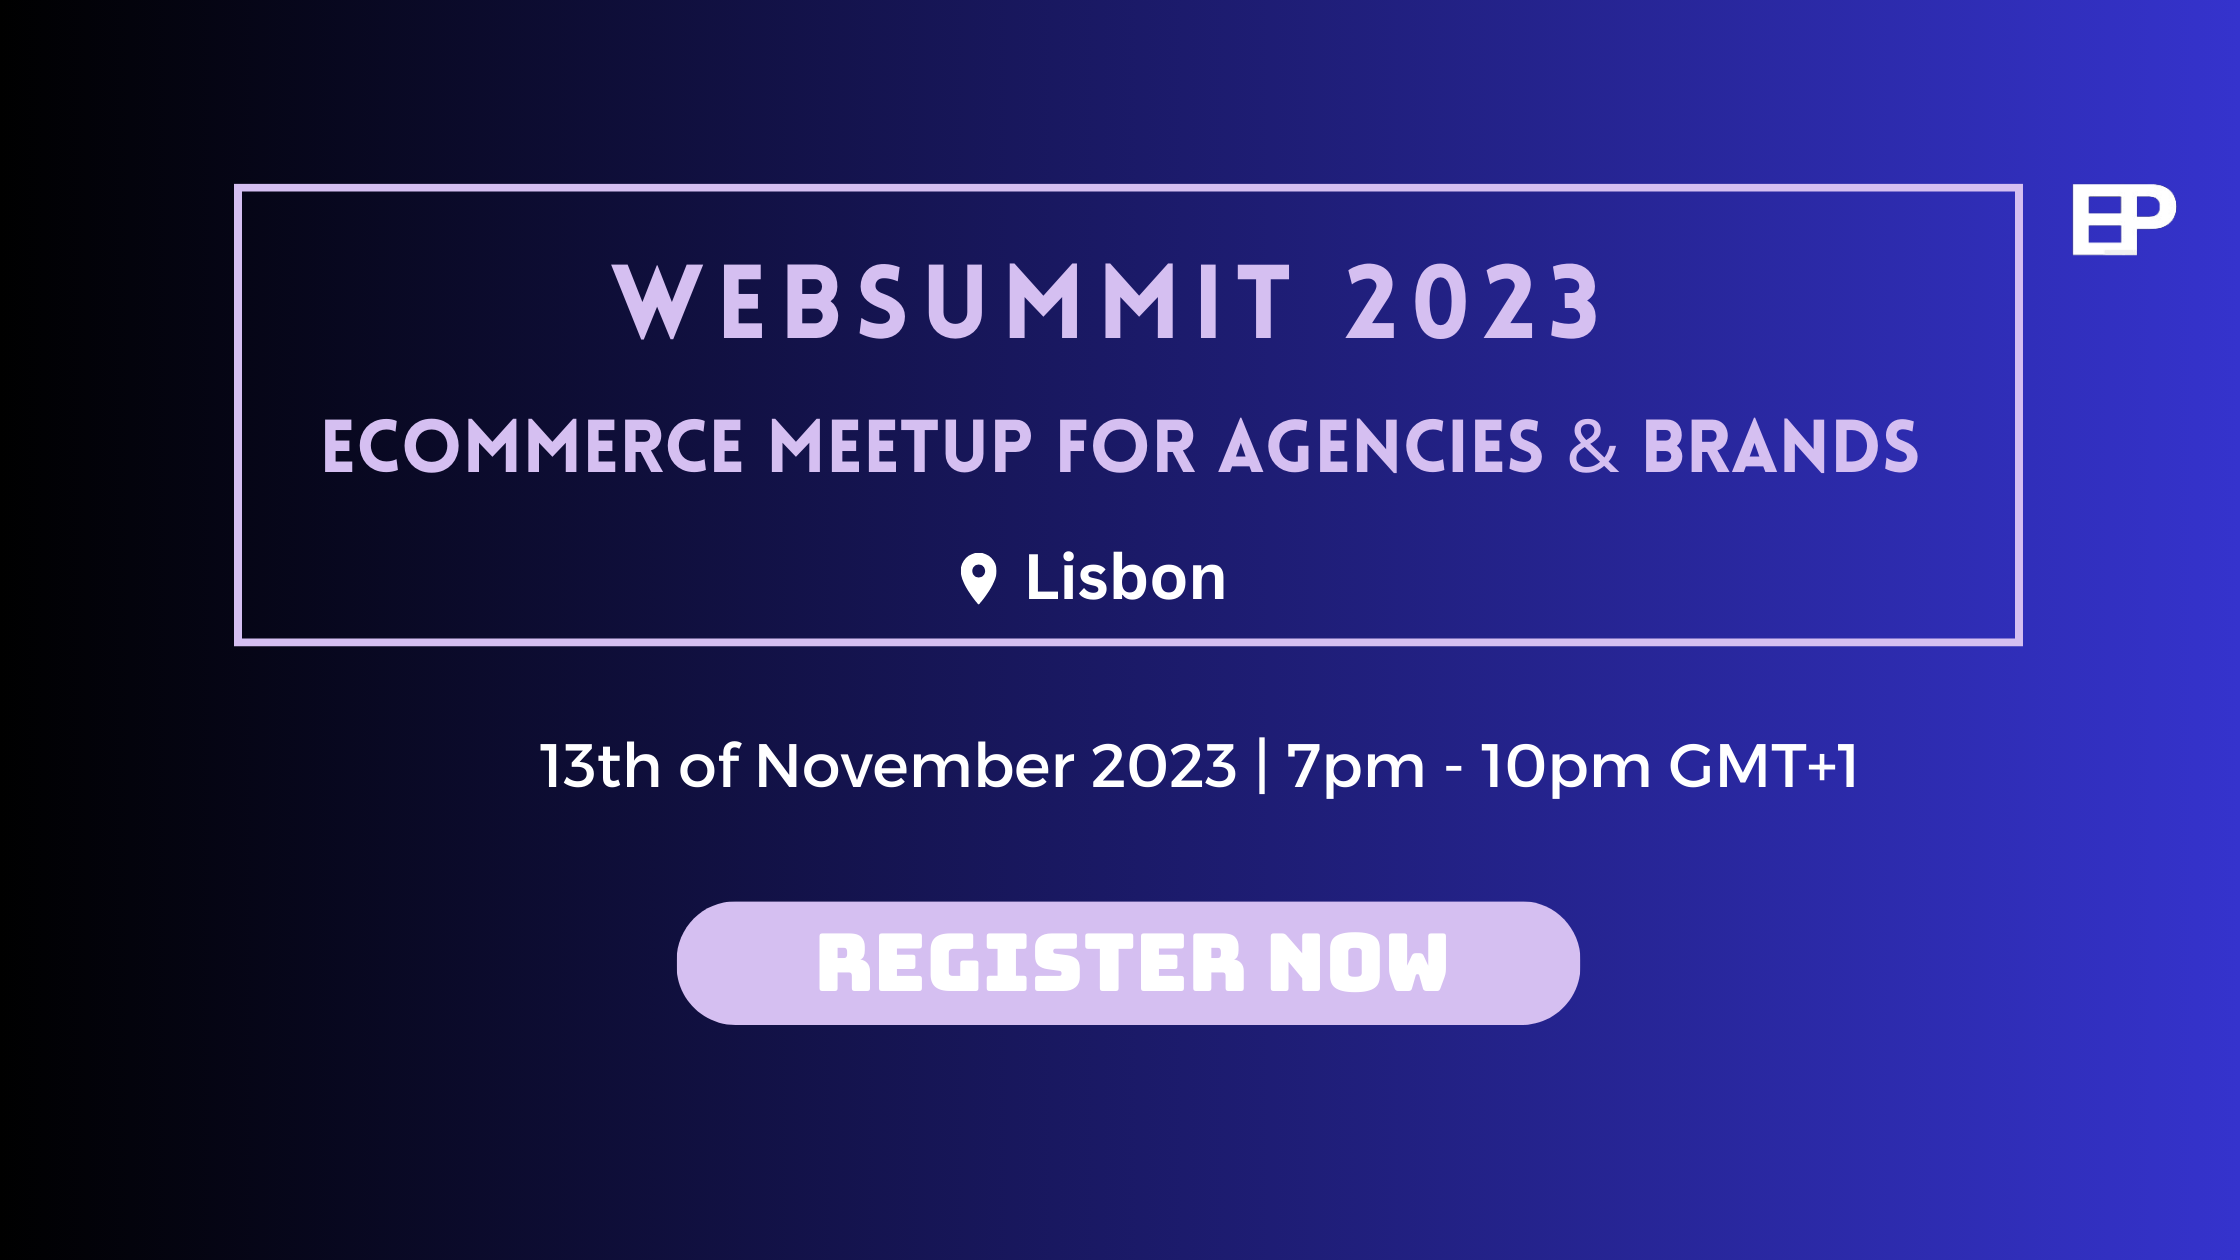 Websummit 2023 | Ecommerce Meetup for Agencies & Brands